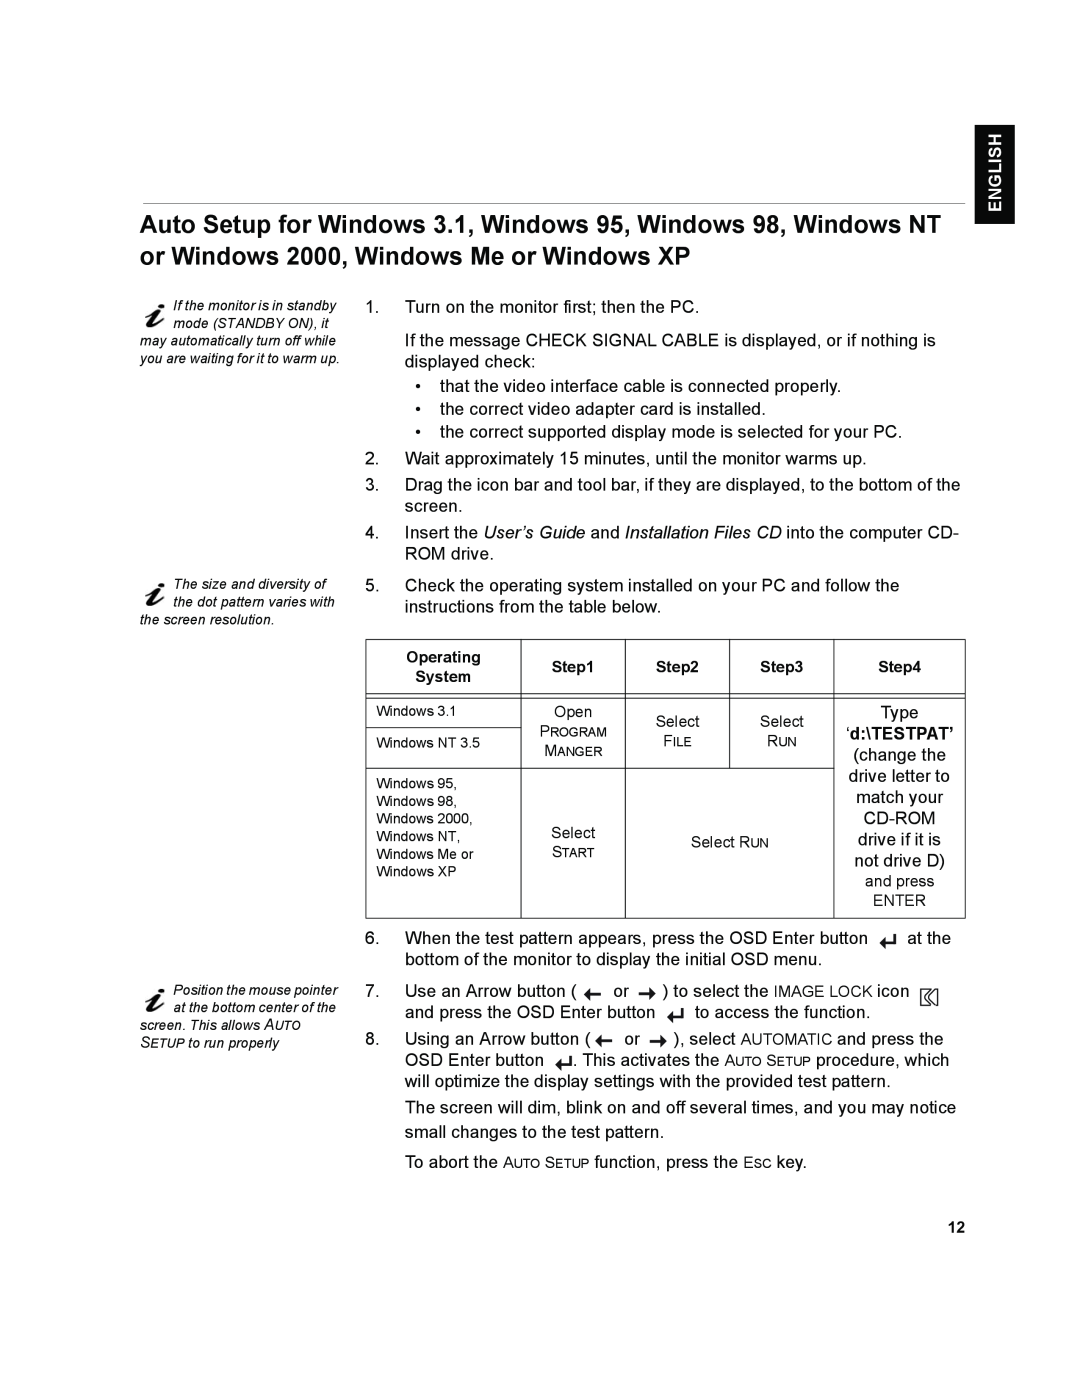 IBM T541A manual English, ‘d\TESTPAT’, Japanese Italiano Español, Compl & Warr, Operating, System 